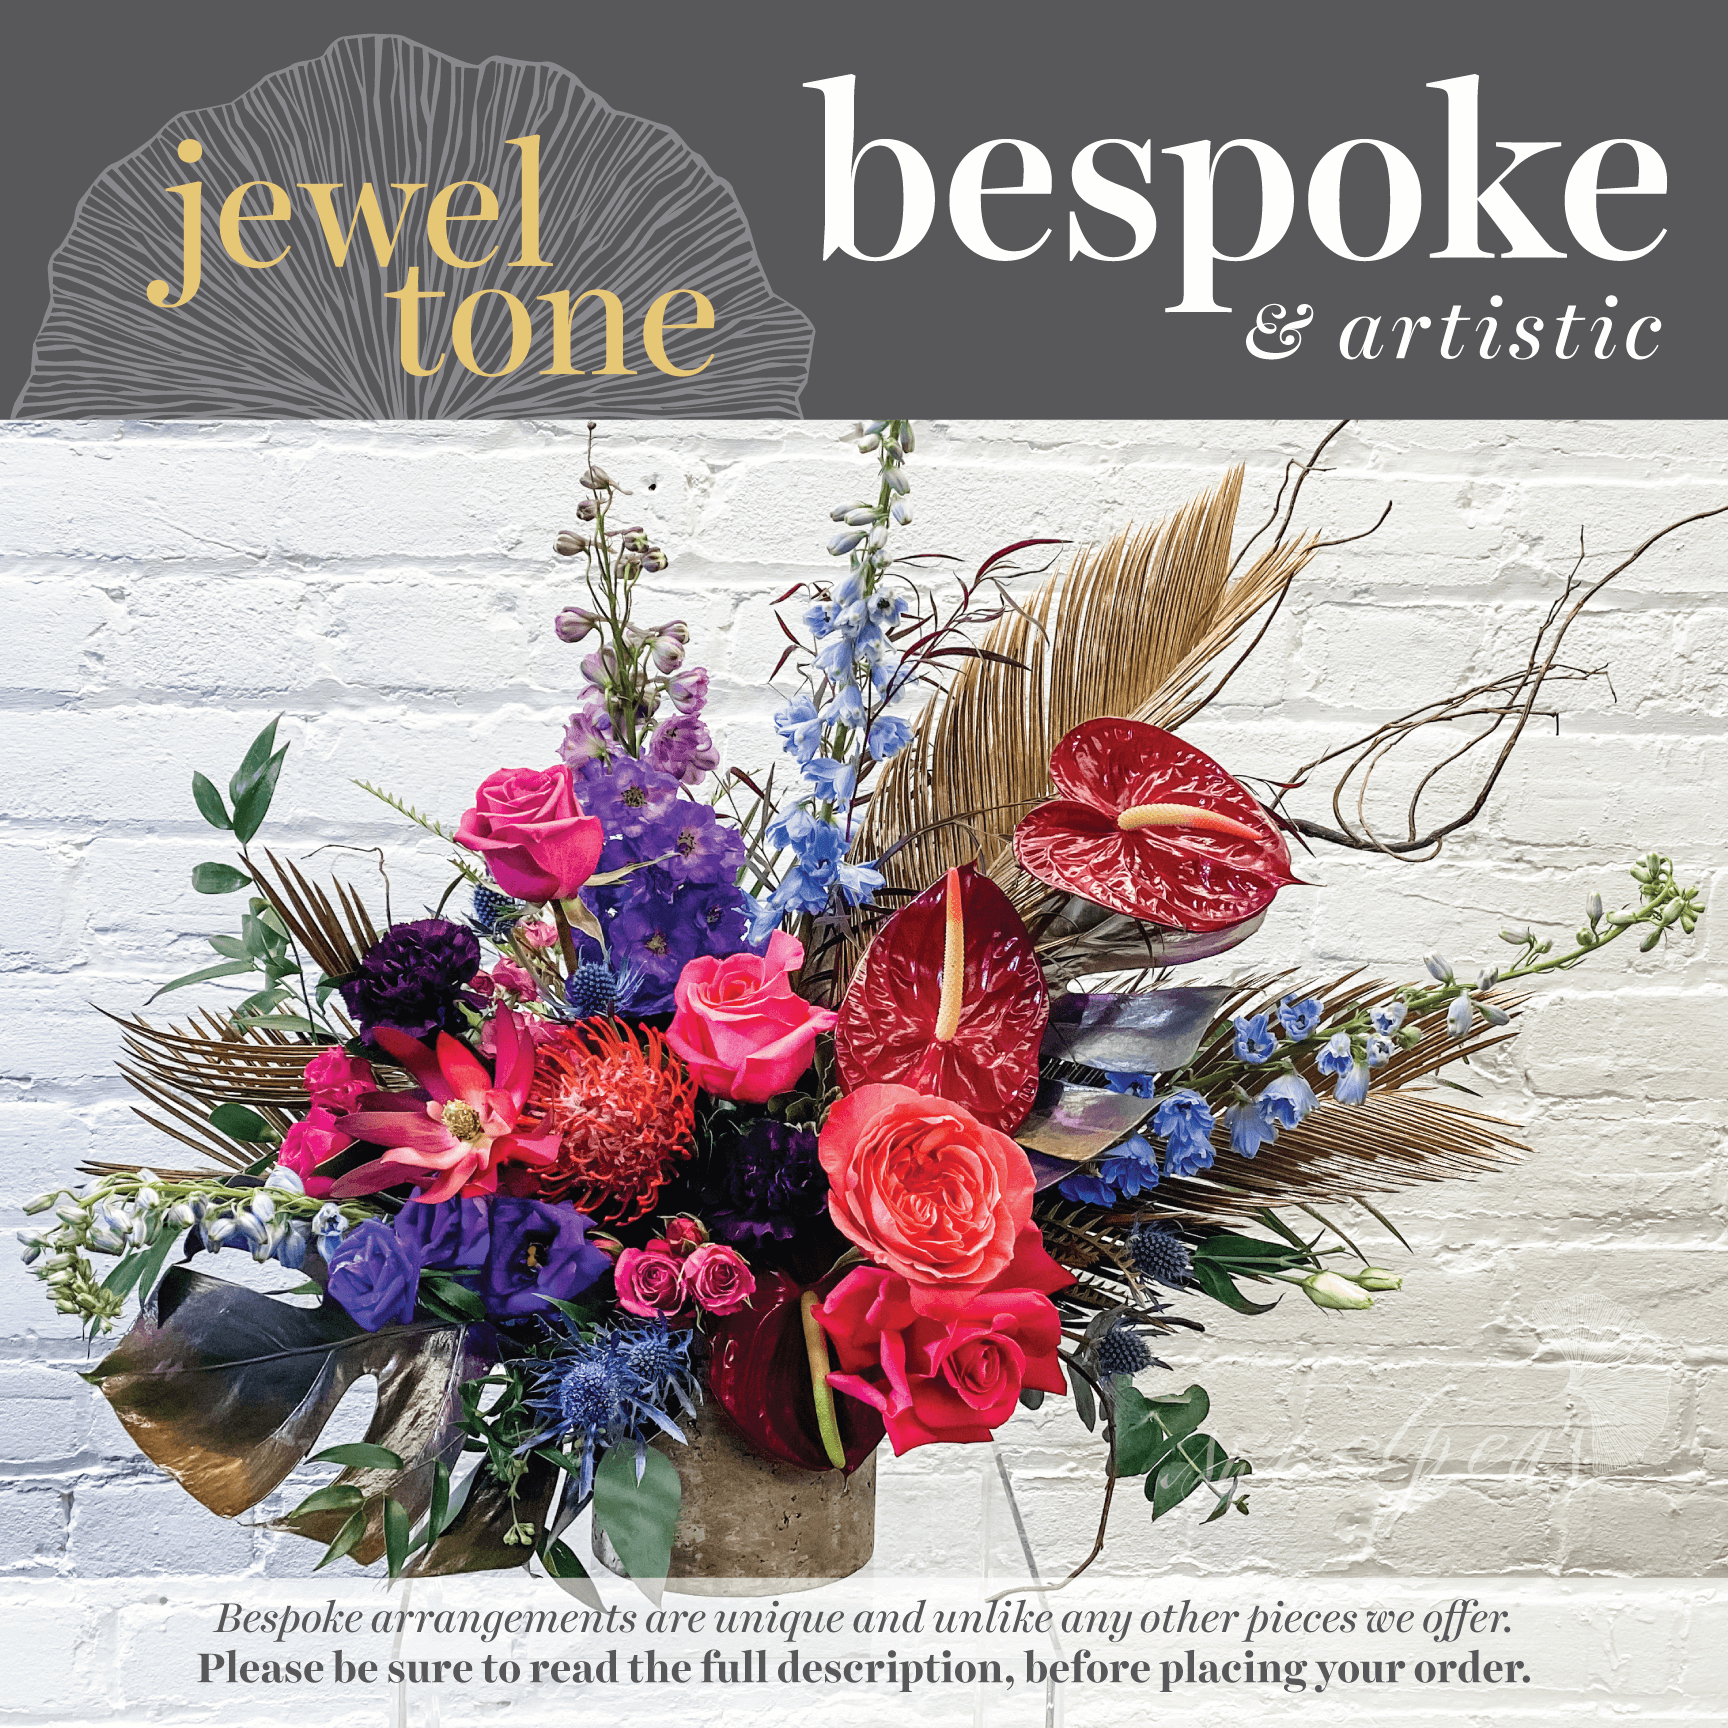 Toronto Flower Delivery - Premium, Bespoke Jewel Tone Floral